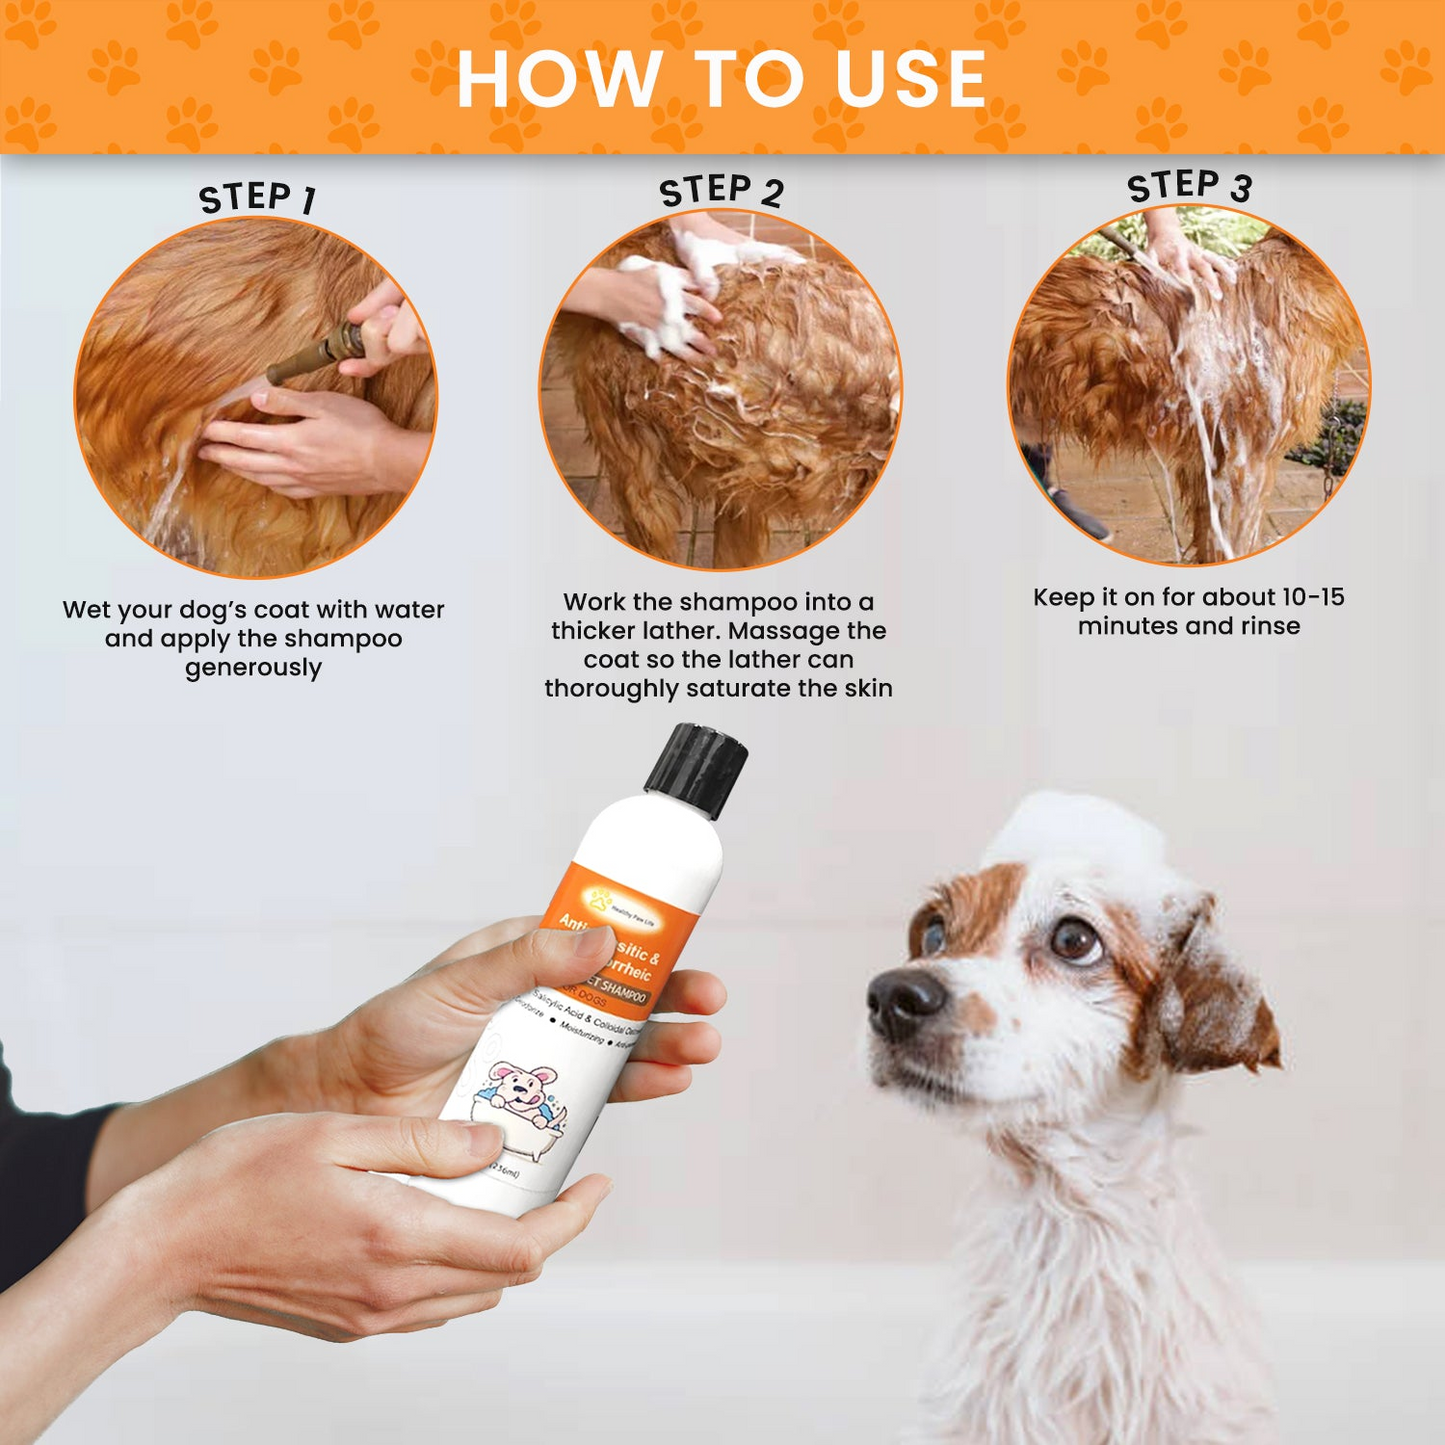 Sulfur Salicylic Acid Oatmeal Dog Shampoo - Antiparasitic and Antiseborrheic Formula, Goodies N Stuff